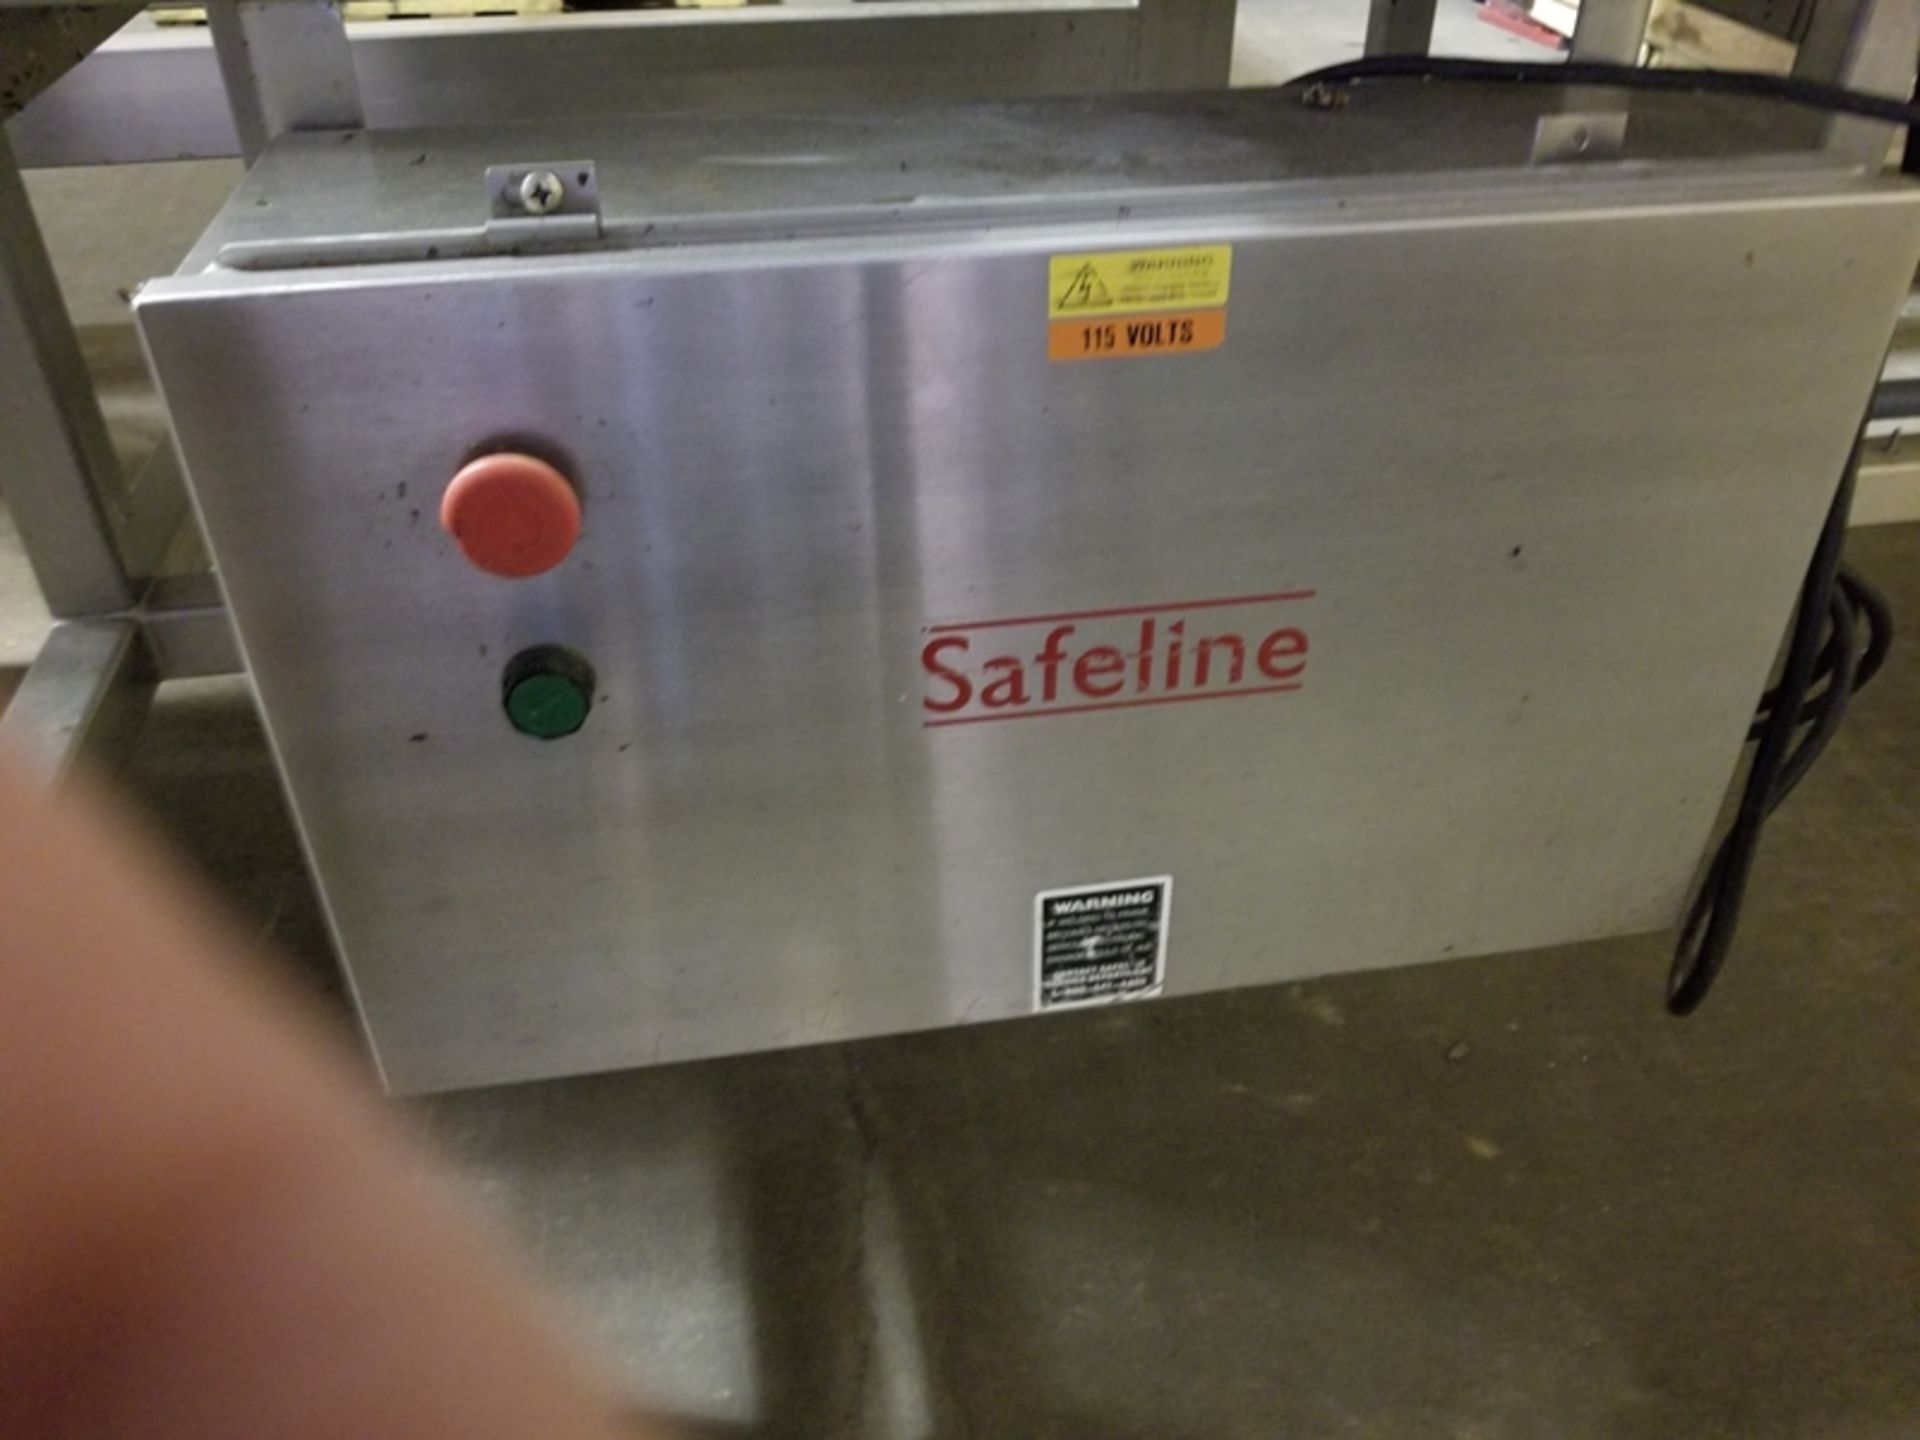 Mettler Toledo metal detector (tunnel type) with safeline conveyor and table - Image 2 of 4